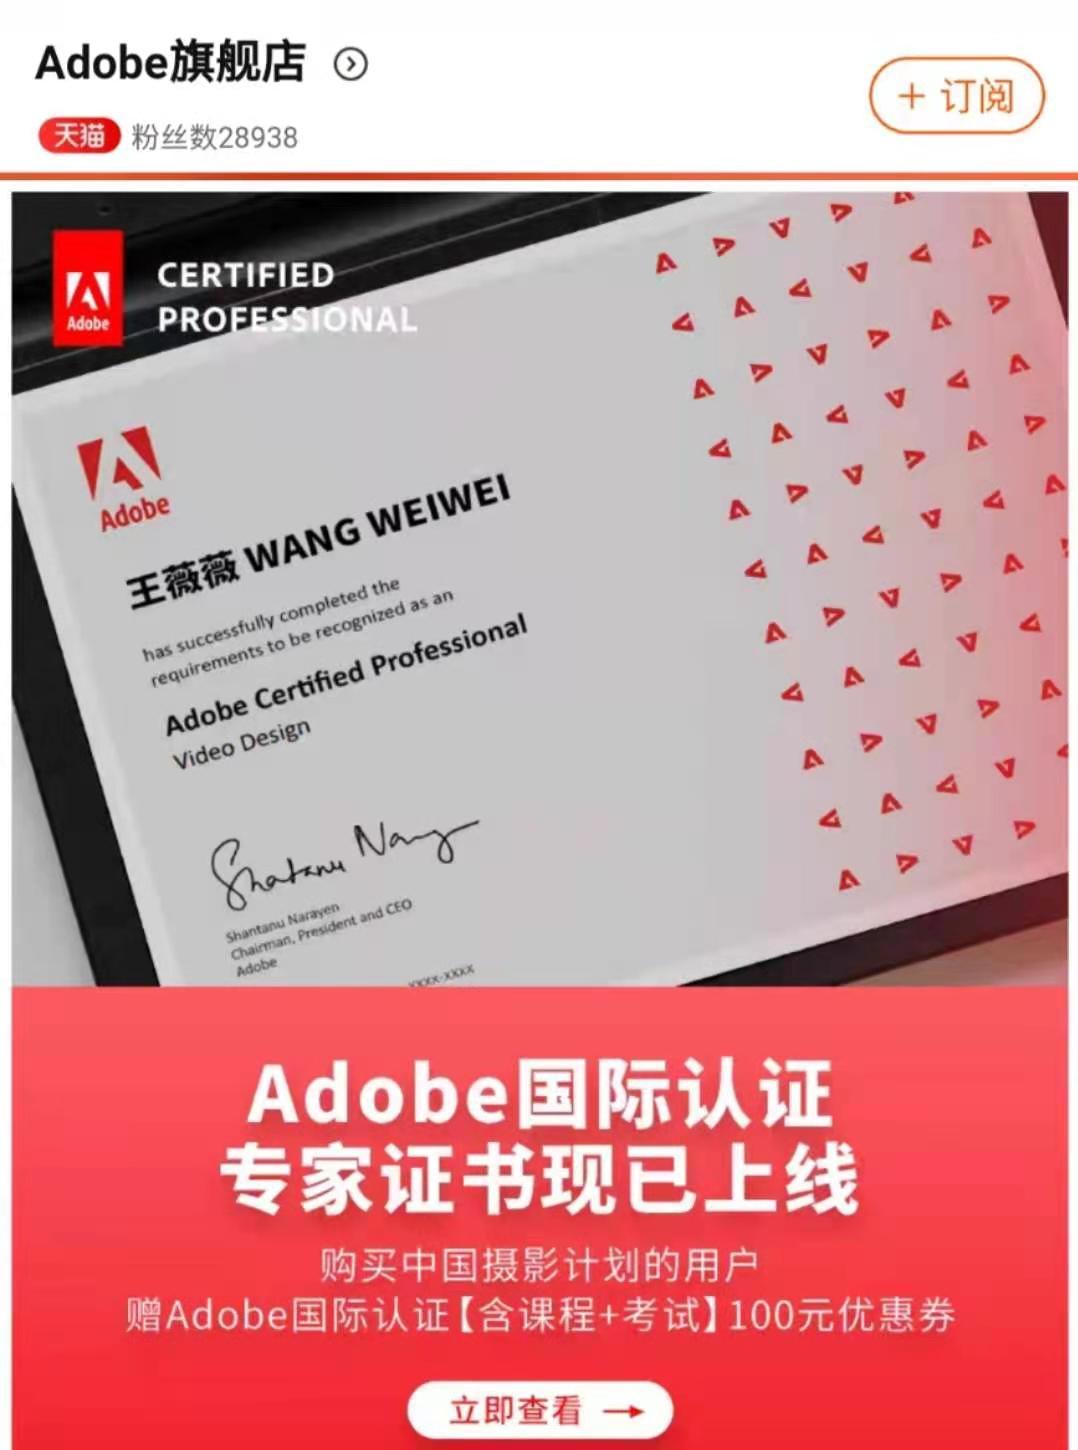 adobe国际认证证书图片